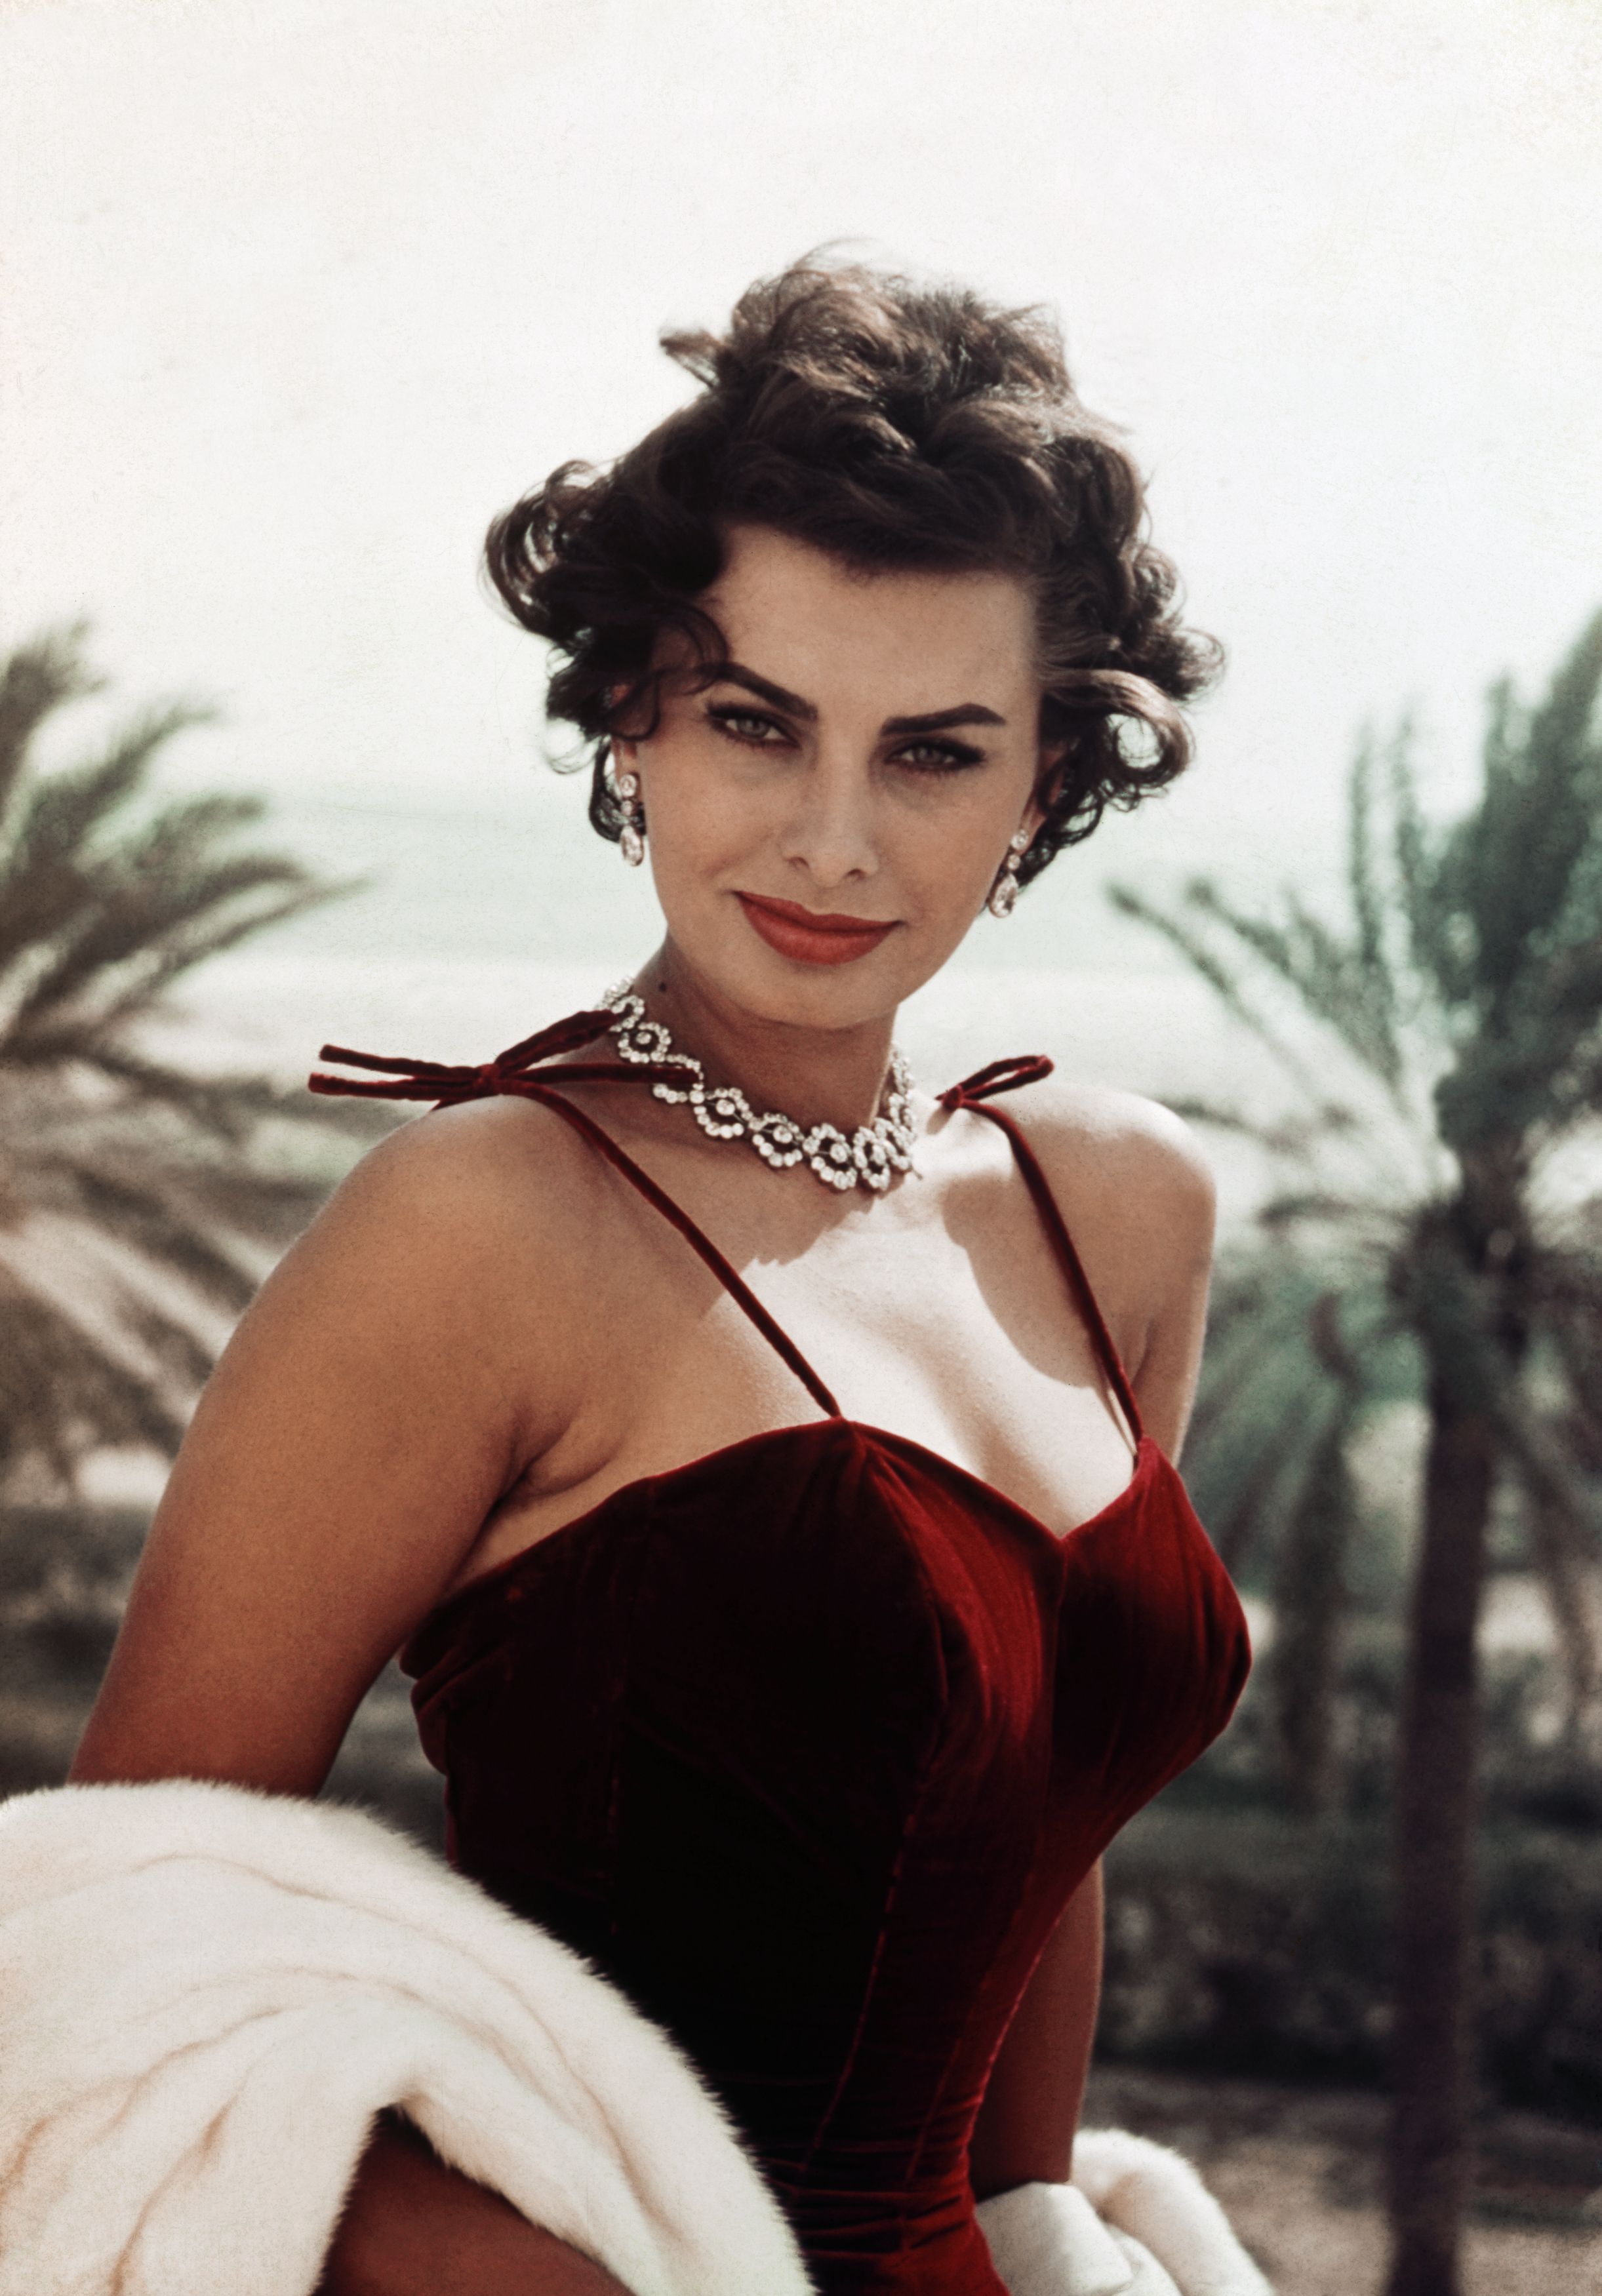  Biografie van Sophia Loren